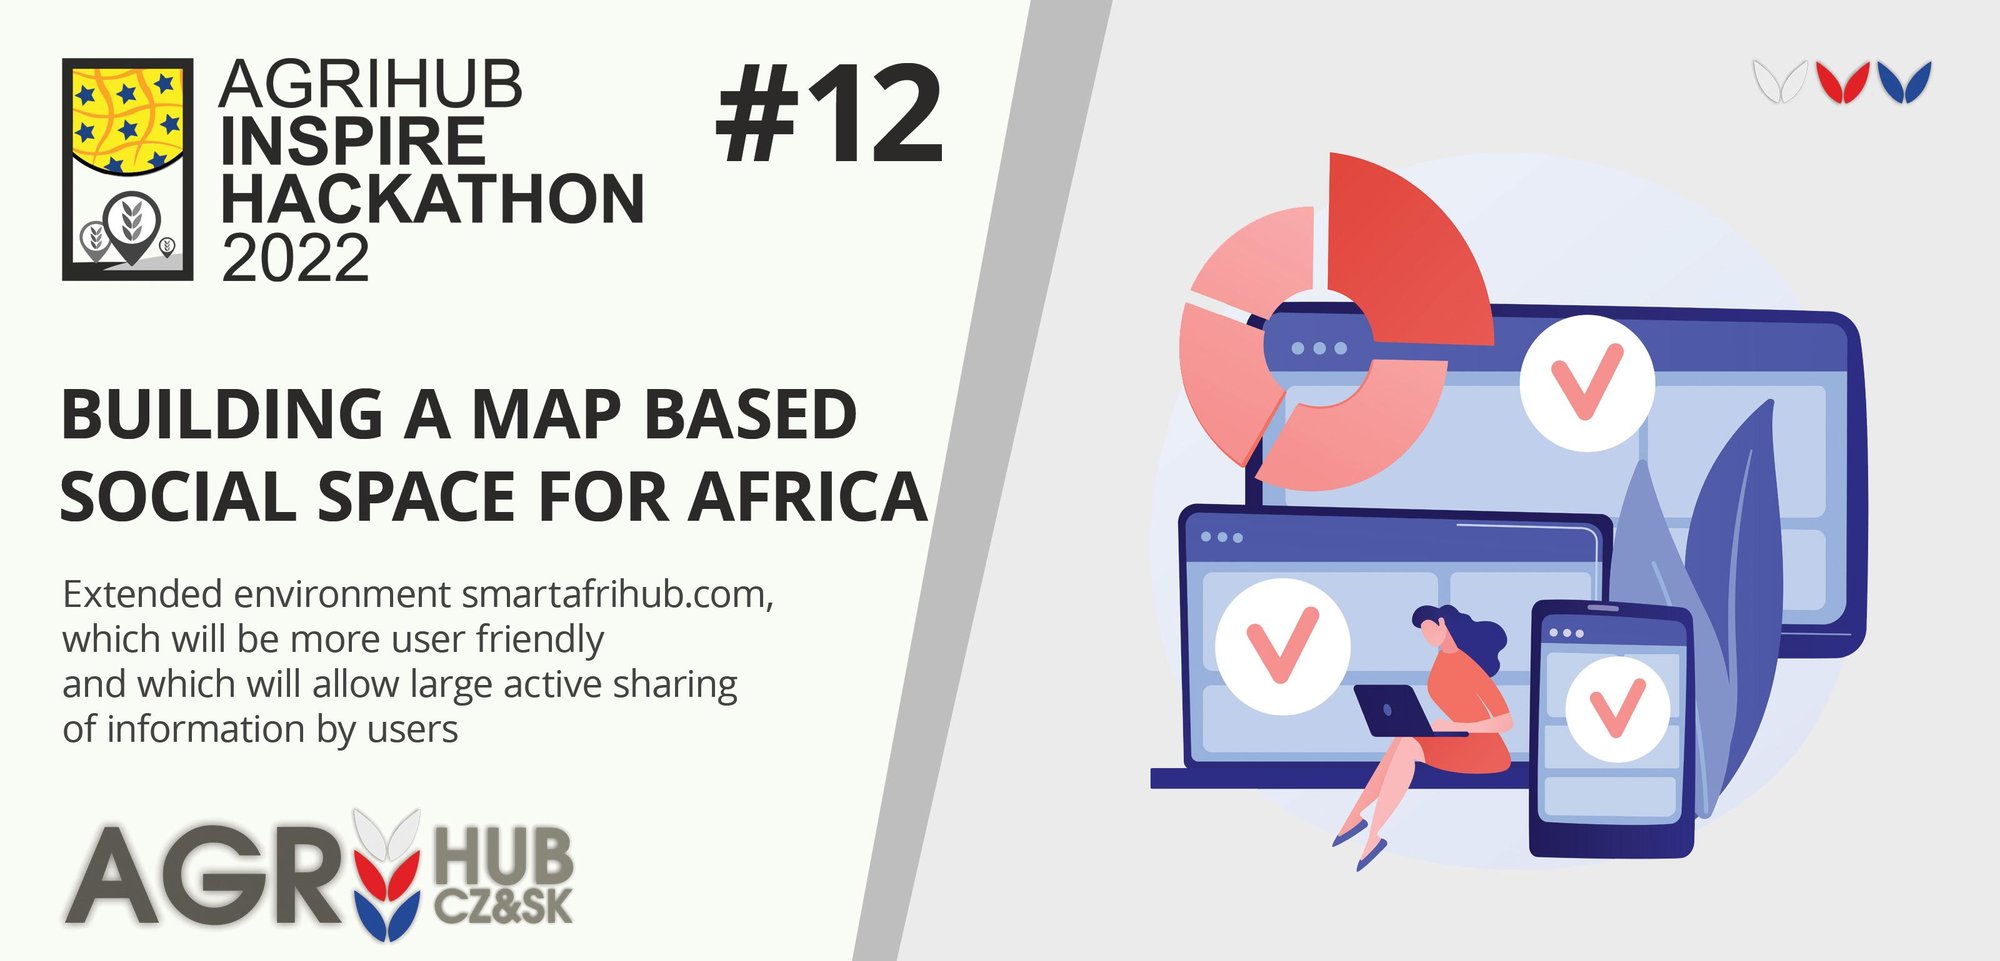 Agrihub INSPIRE Hackathon 2022: Help us build a map based social space for Africa via Challenge #12